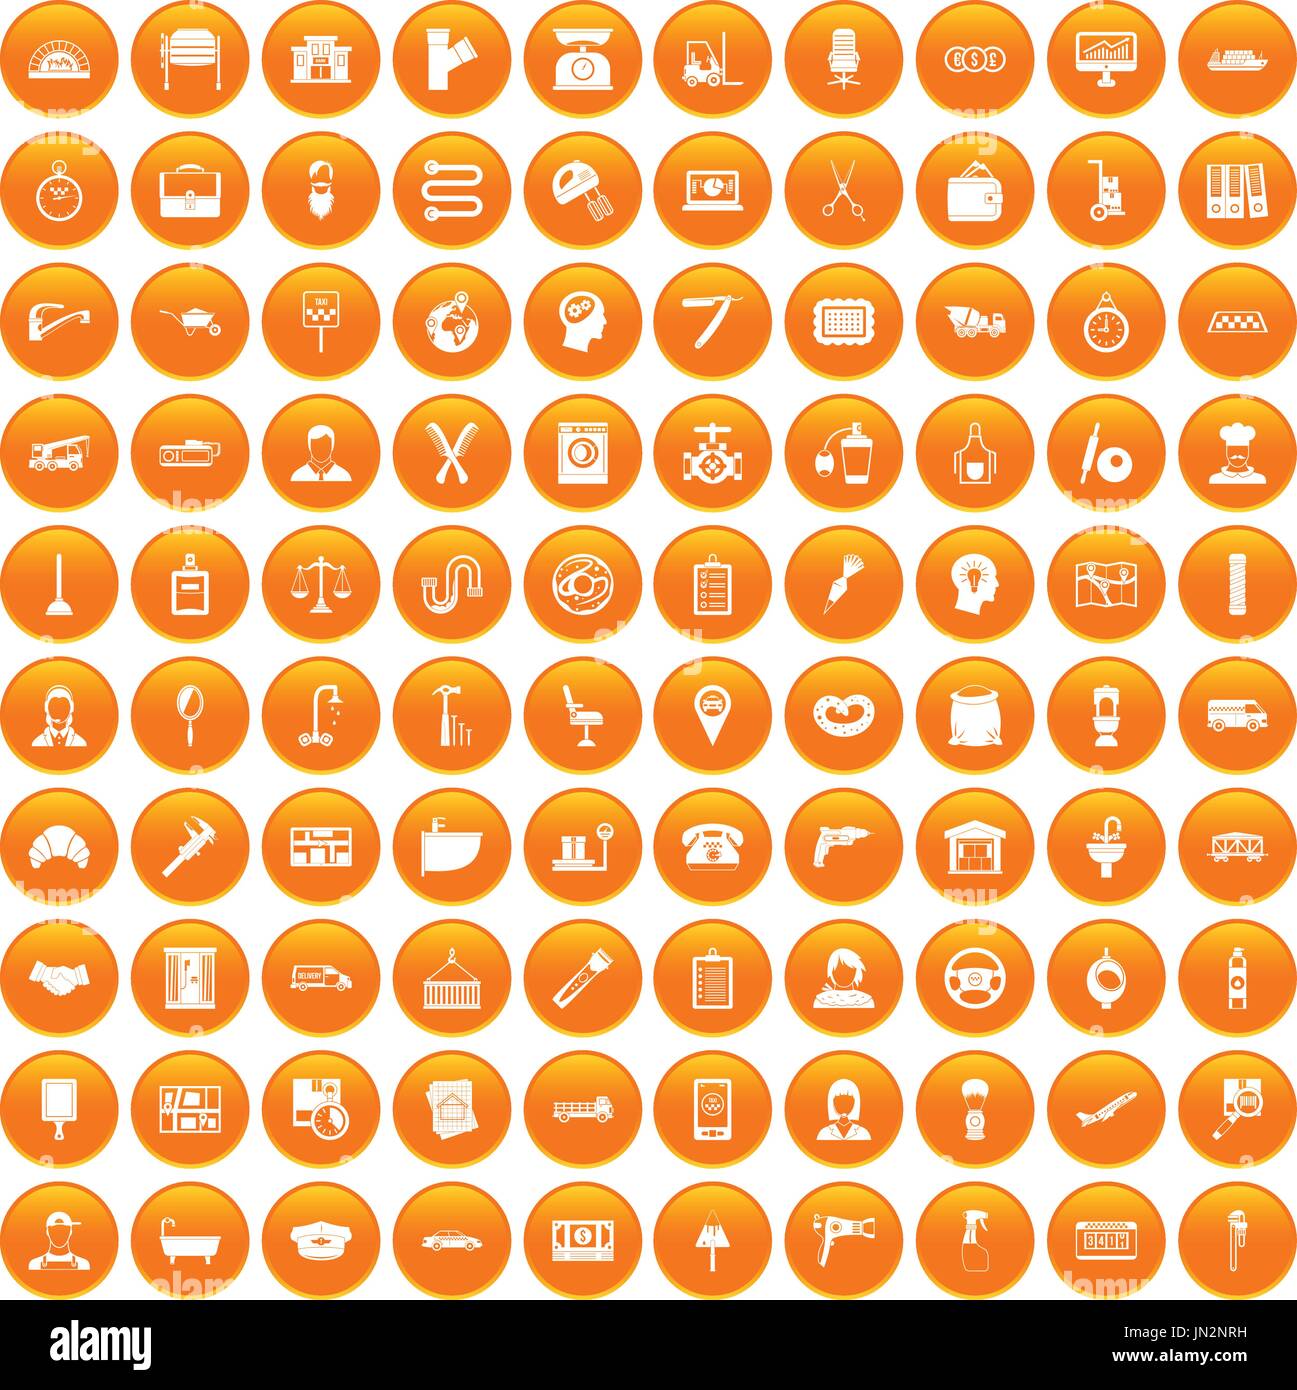 100 arbeiten Icons set orange Stock Vektor